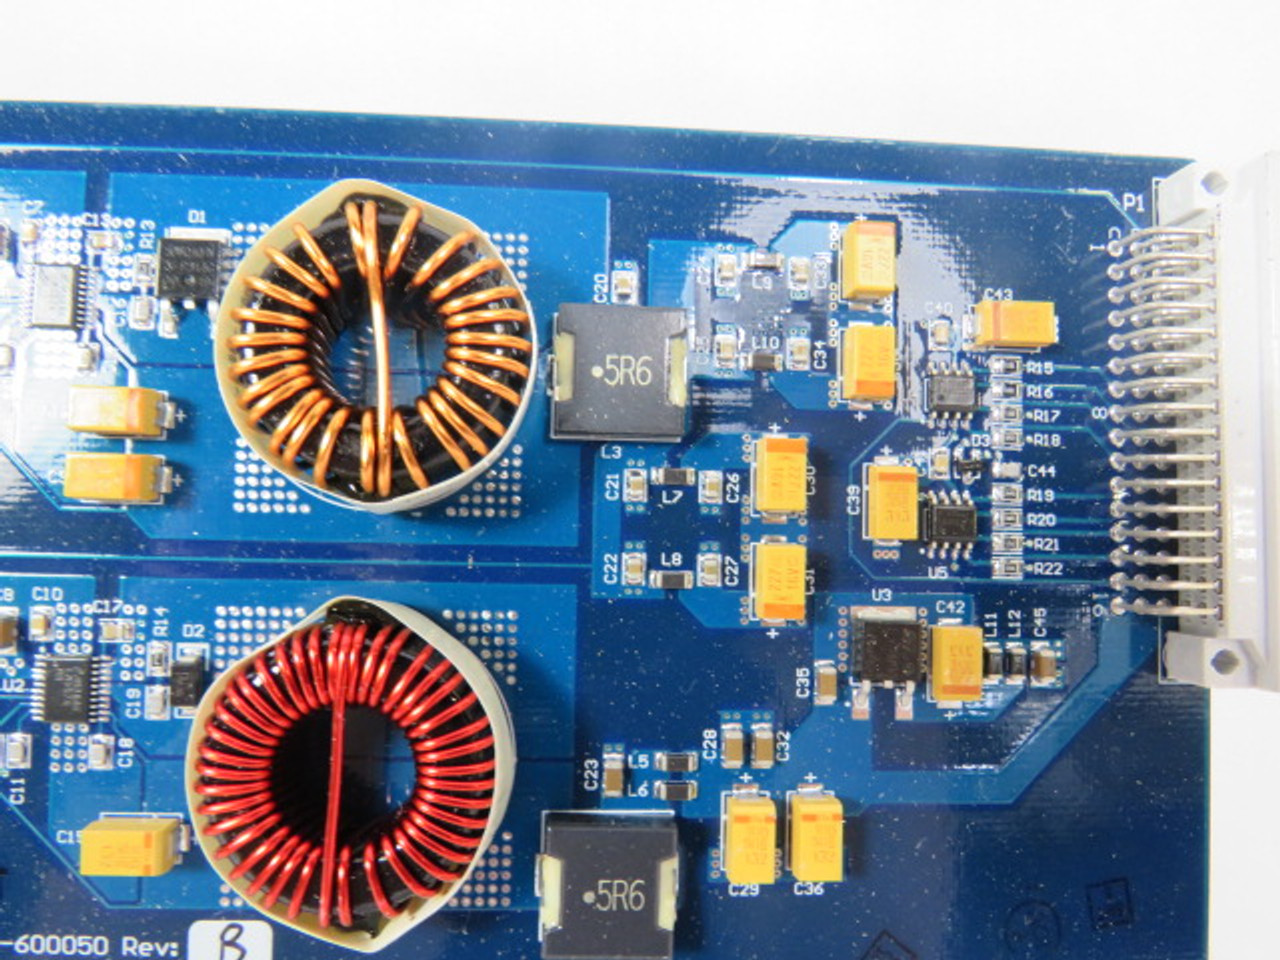 PV Powered 22-600050 RTF Plug-In Power Distribution Circuit Board USED